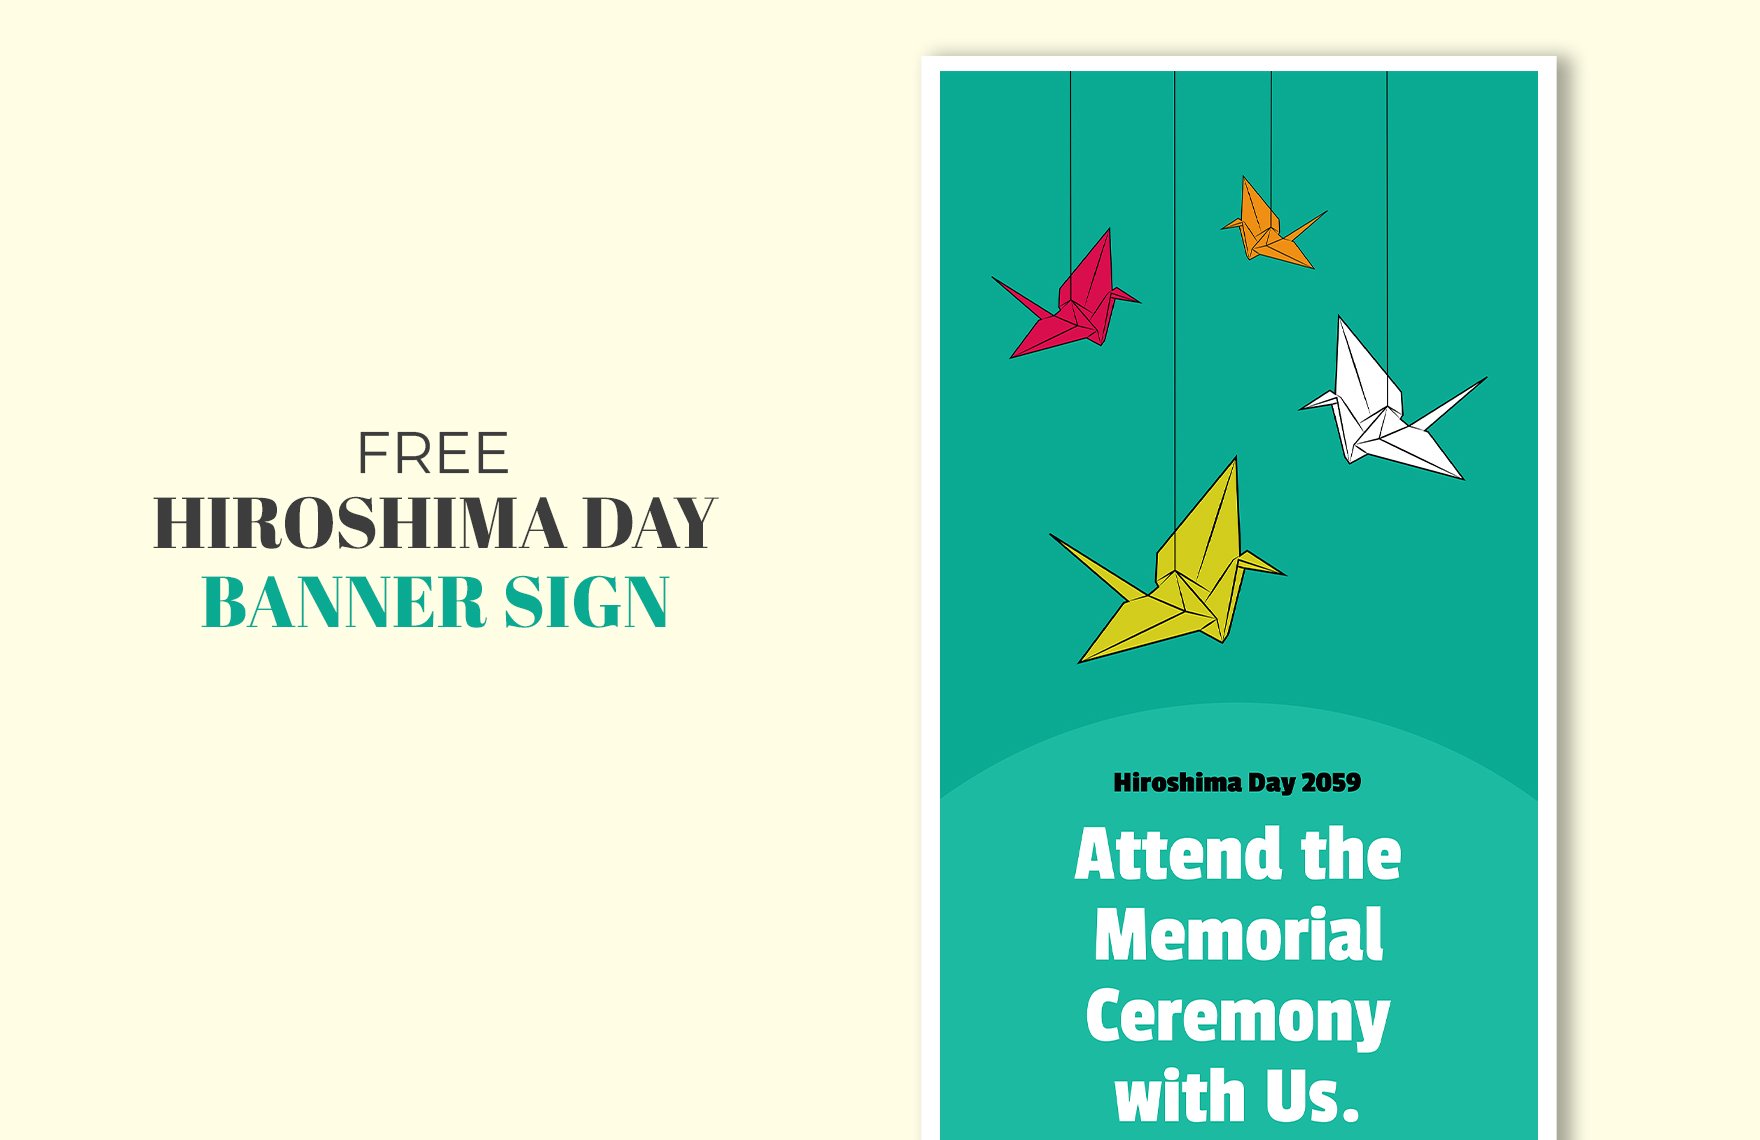 Hiroshima Day Banner Sign in Illustrator, PSD, EPS, SVG, JPG, PNG